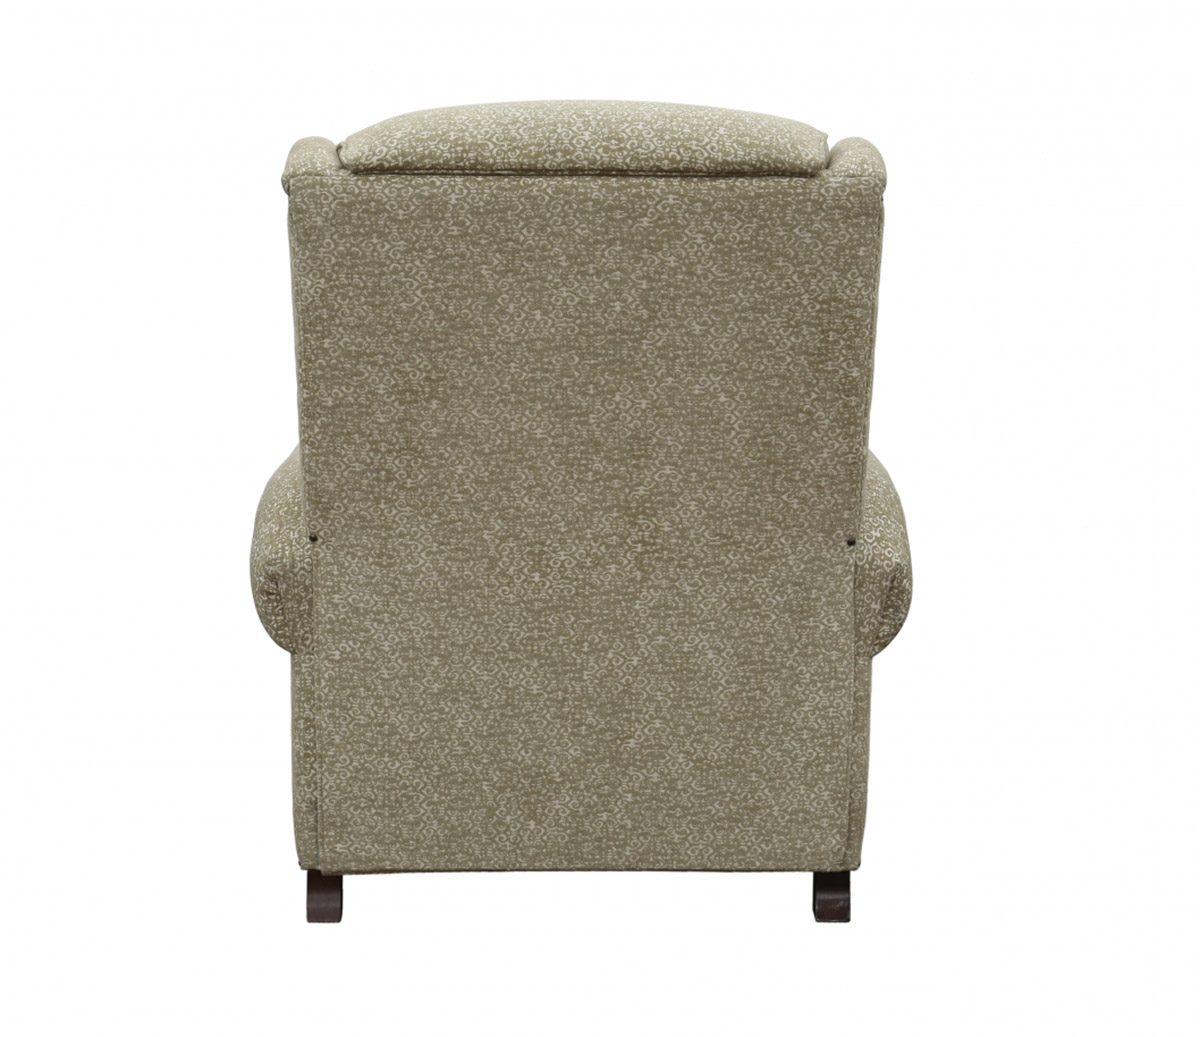 Barcalounger Lexington Power Recliner Chair with Power Head Rest and Lumbar - Sandcastle/fabric